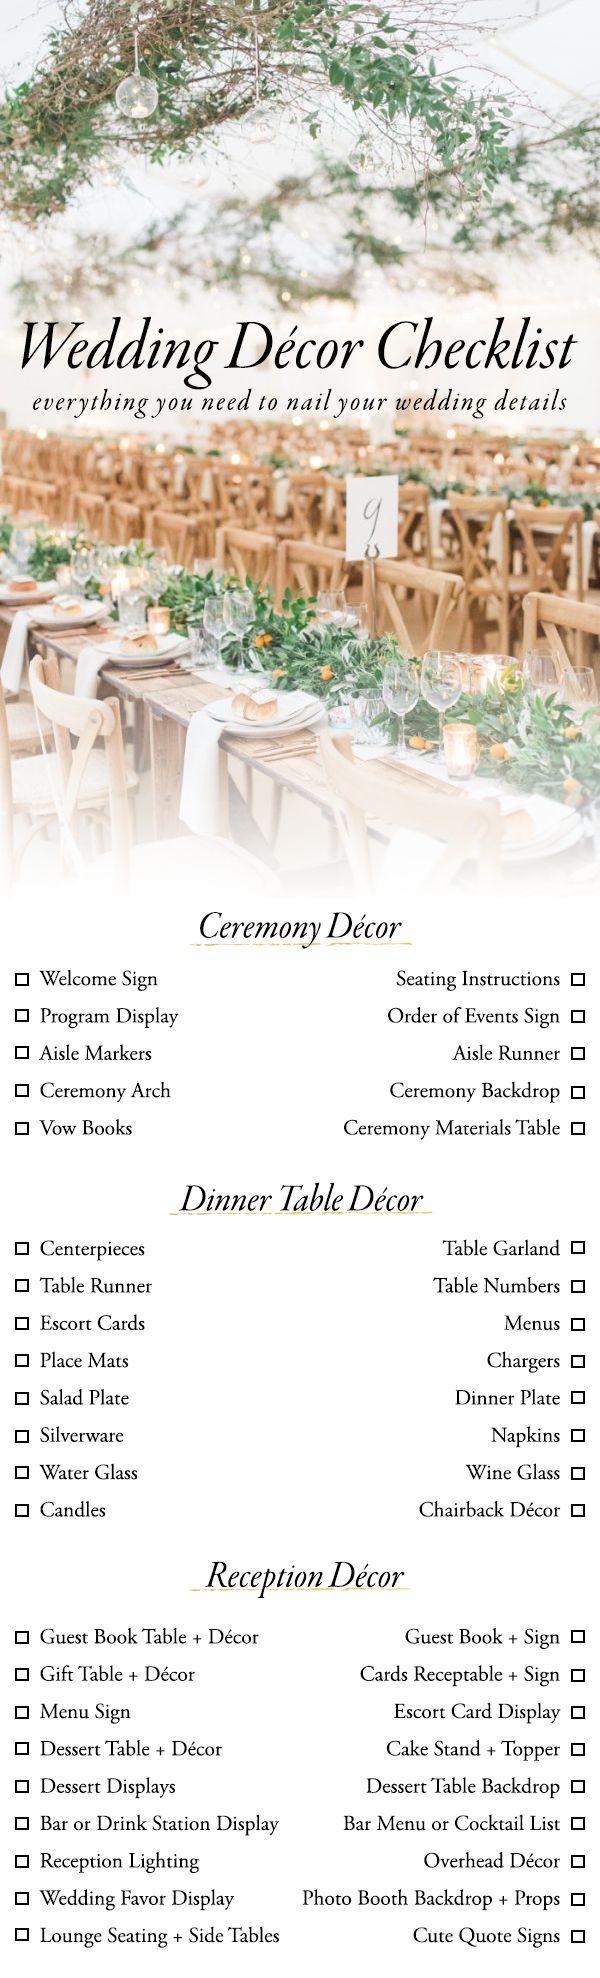 زفاف - Use This Wedding Décor Checklist To Help You Nail Every Detail